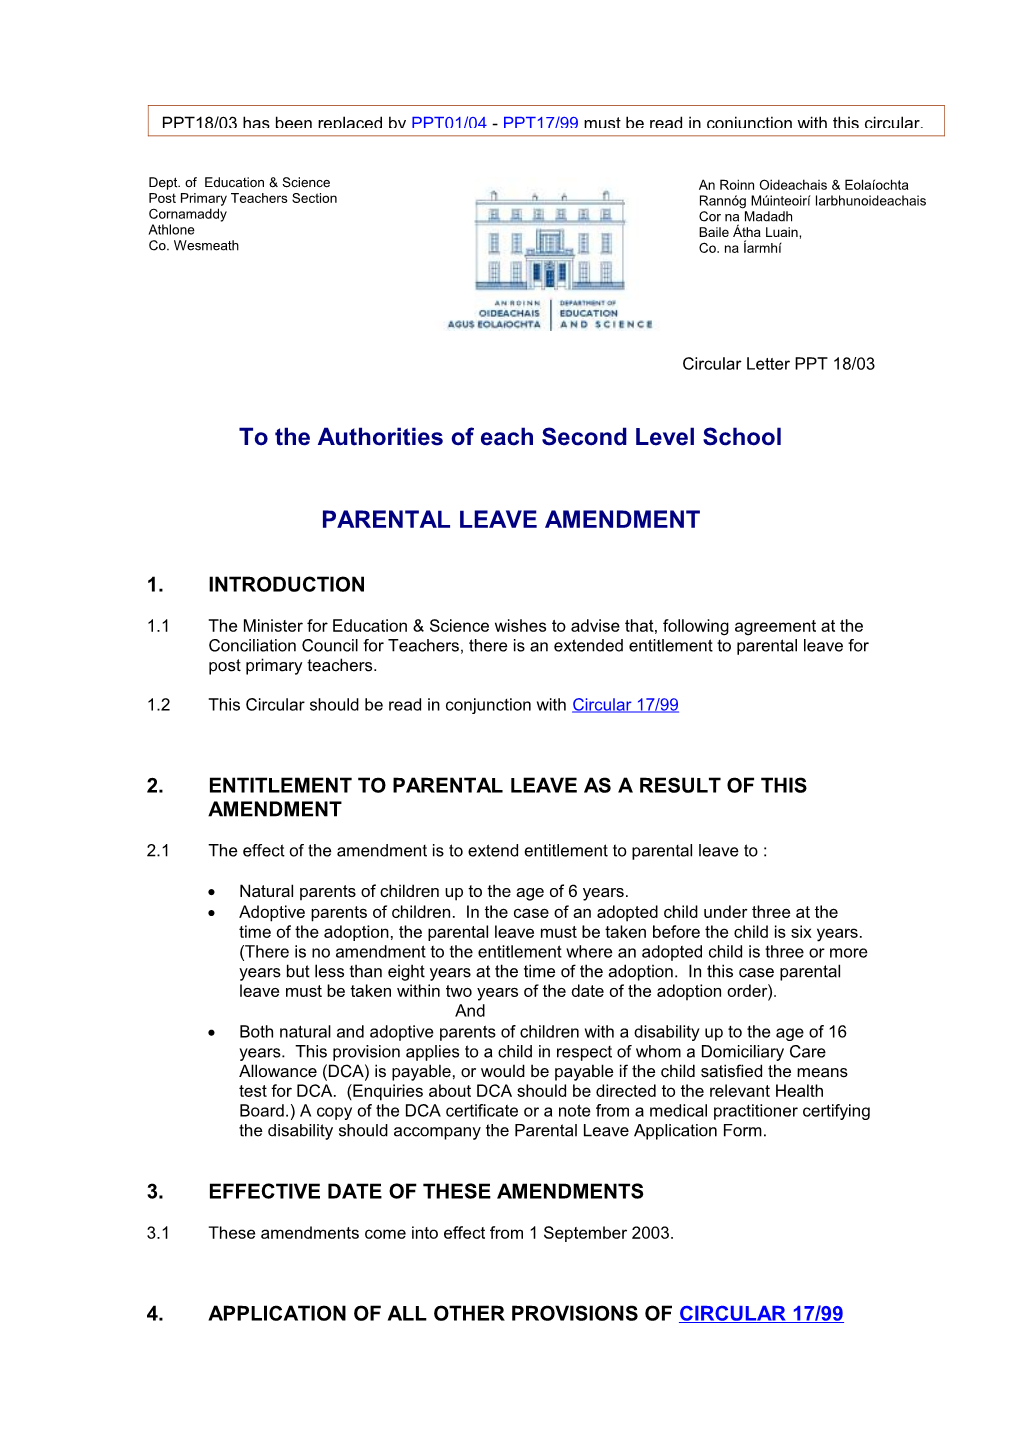 Circular PPT18/03 - Parental Leave Amendment